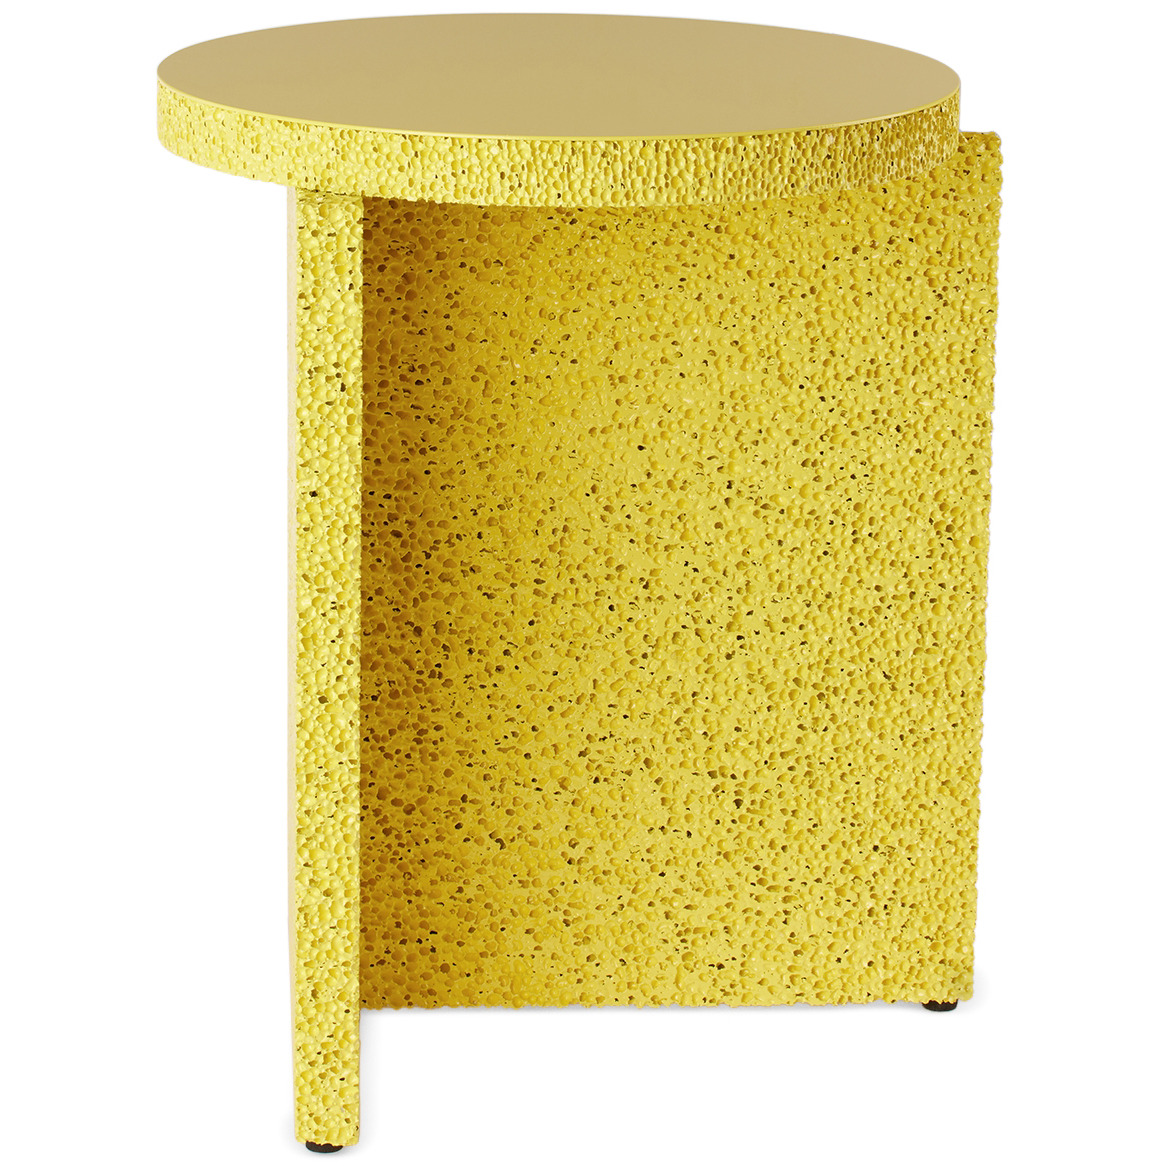 Calen Knauf Yellow Sponge Table - image 1